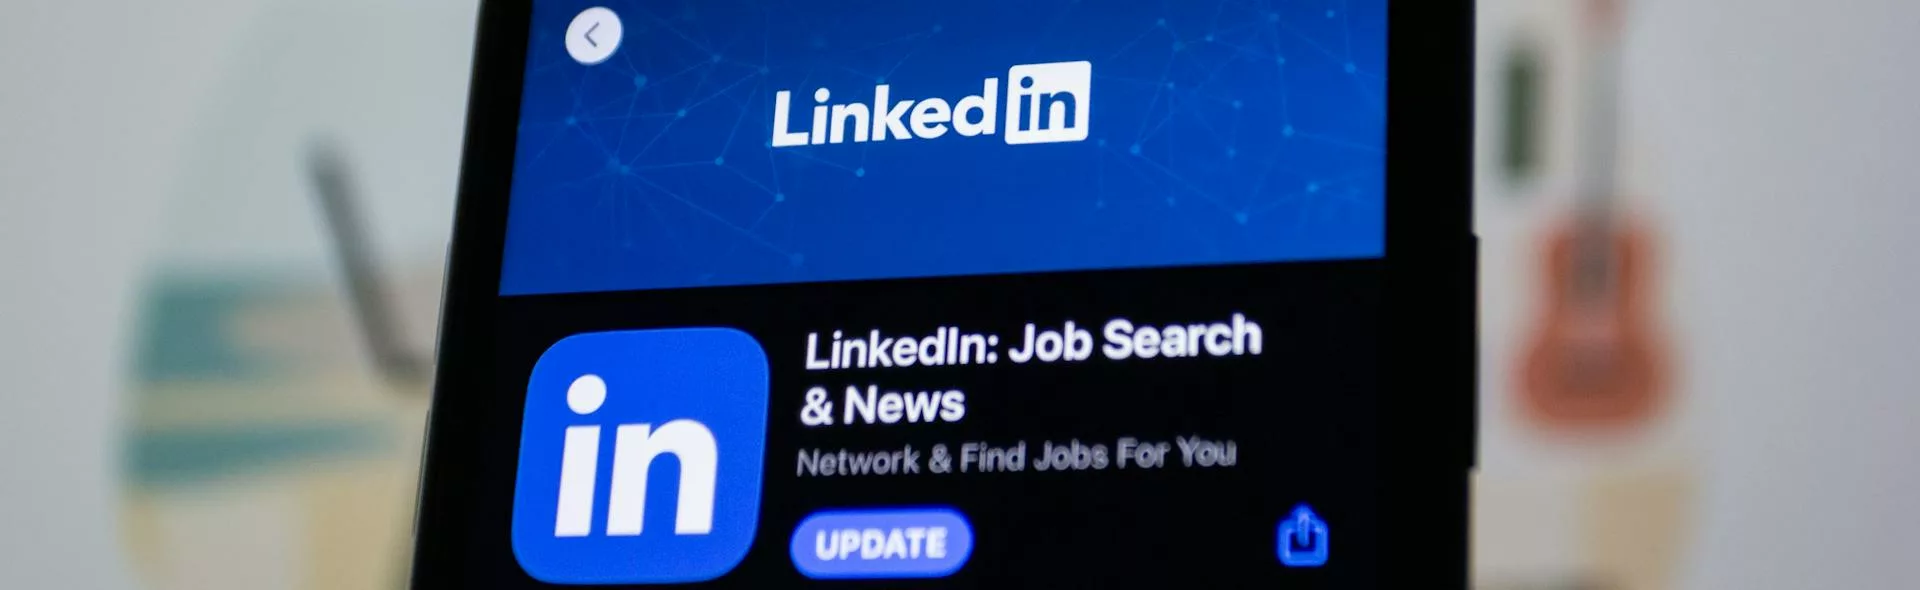 Growing LinkedIn network